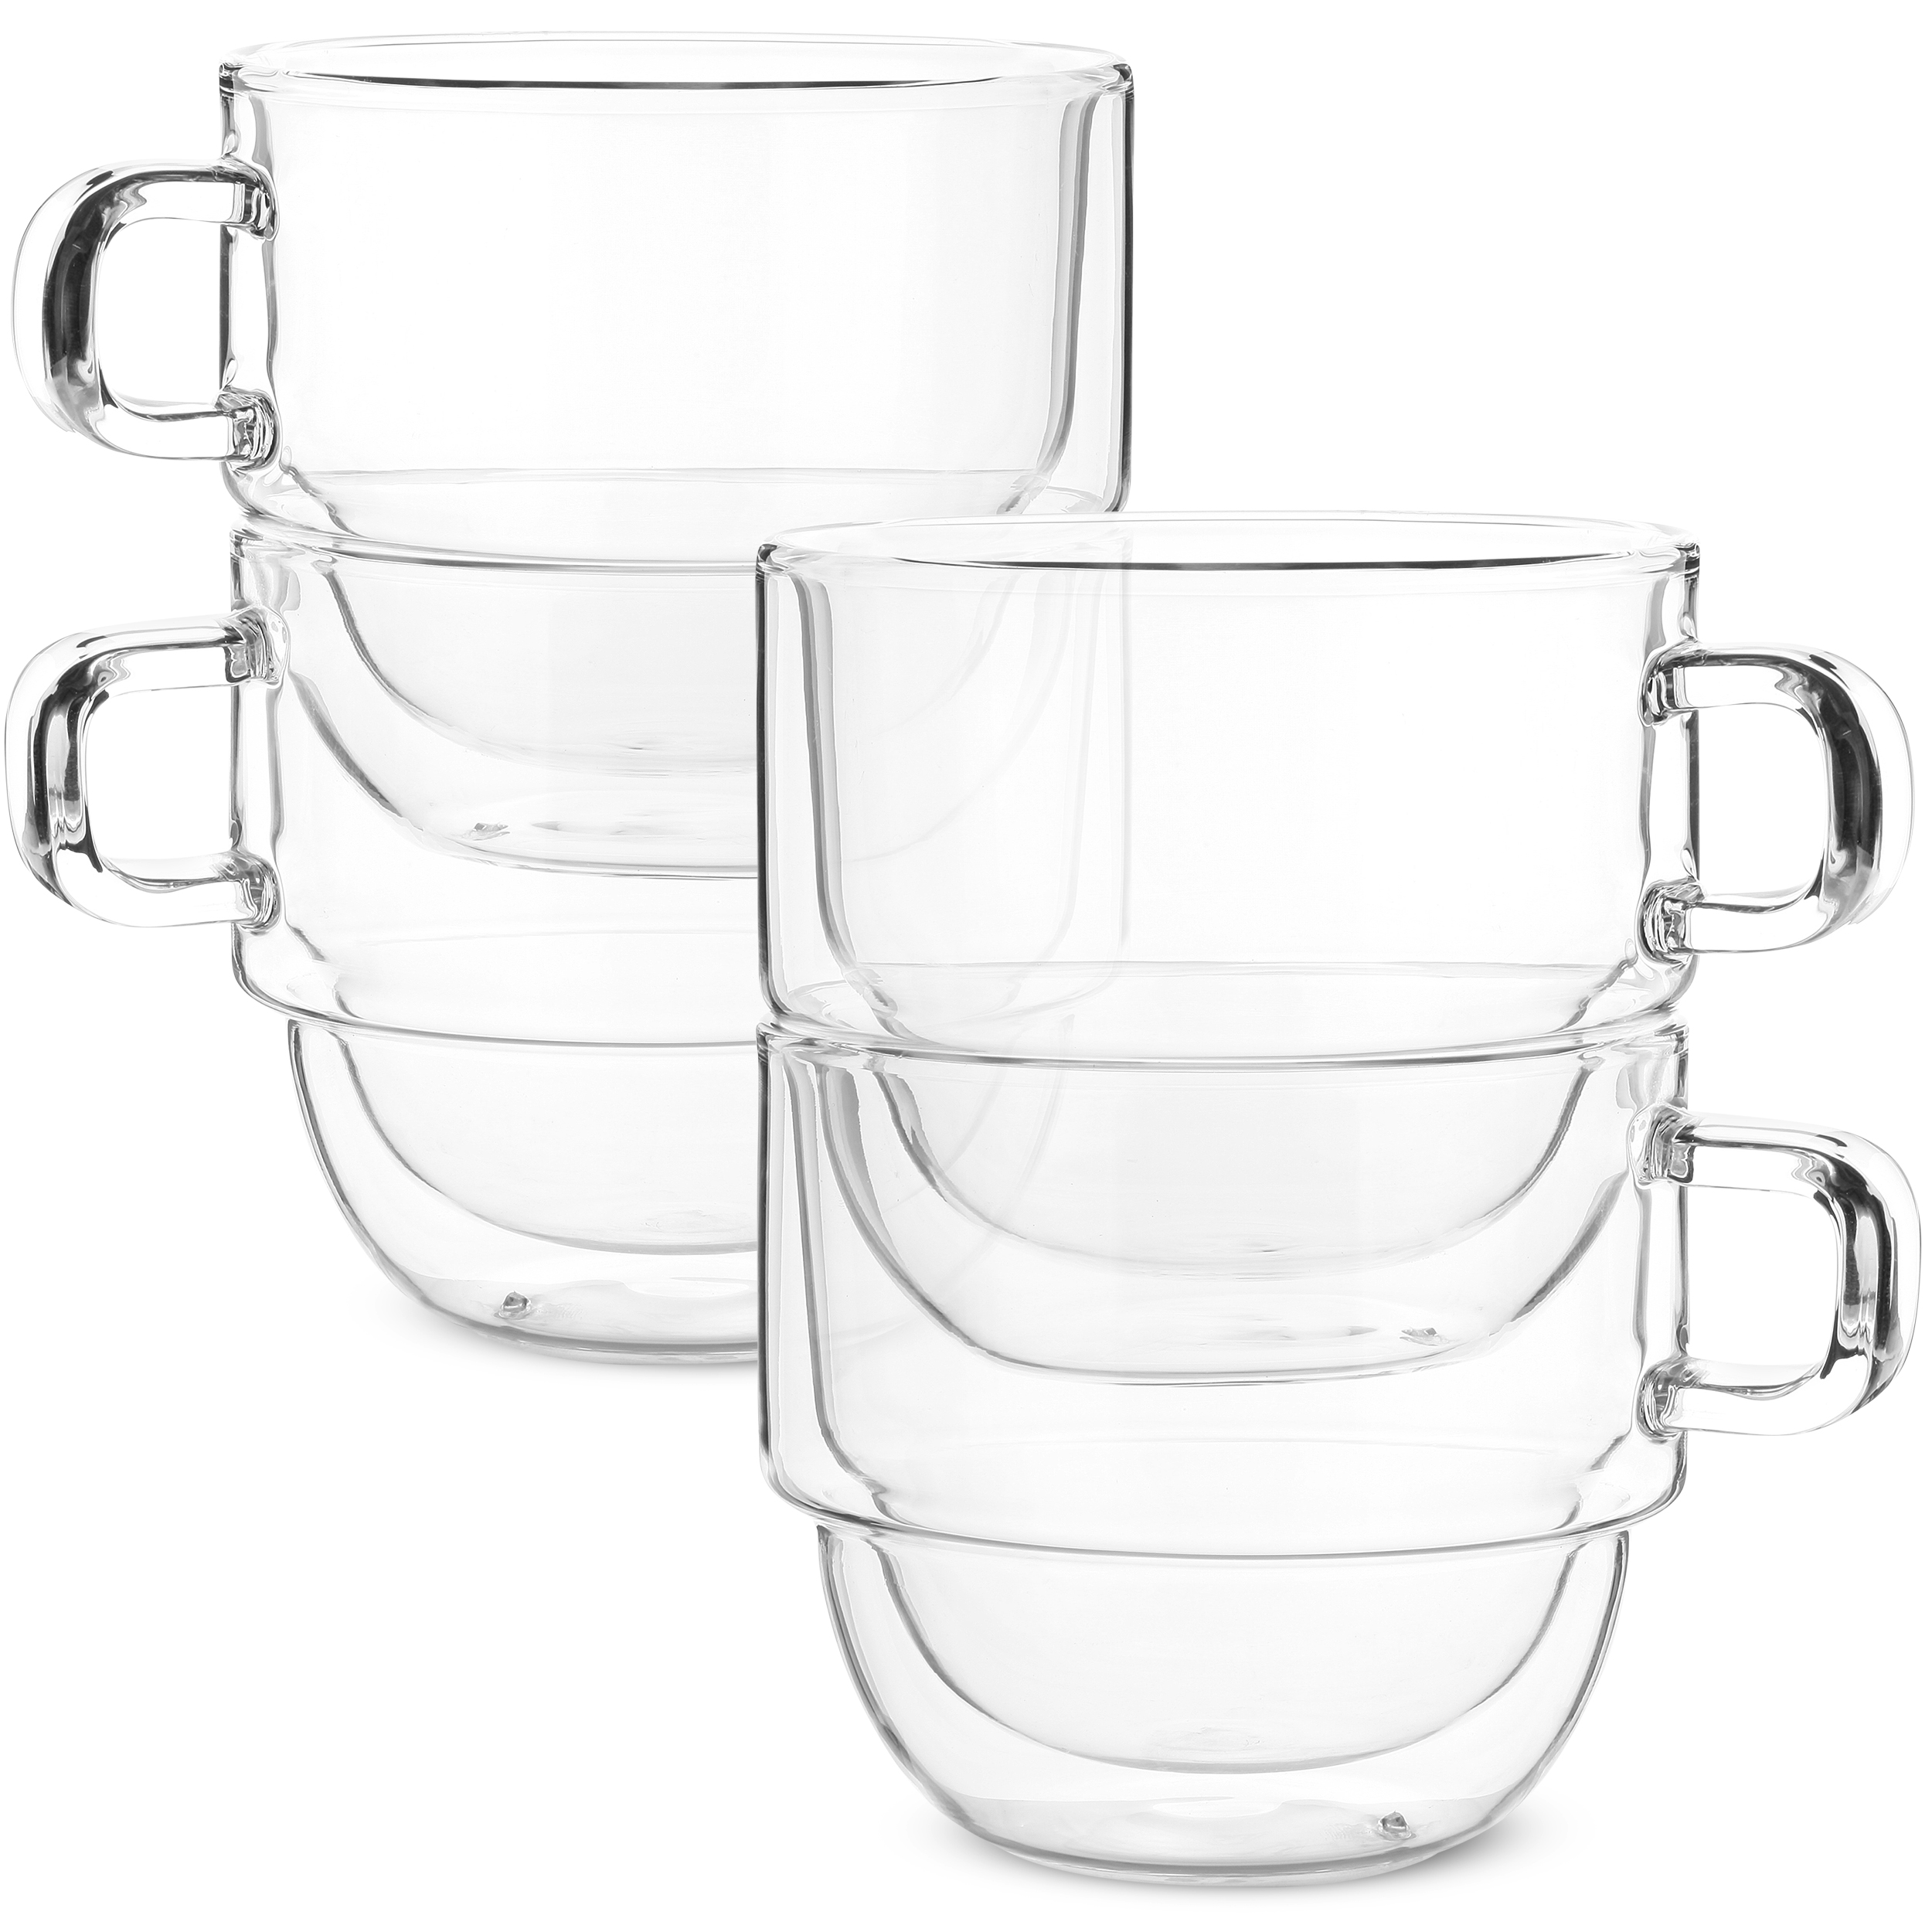 BTäT- Insulated Stackable Coffee Mugs (12oz, 350ml) set of 4